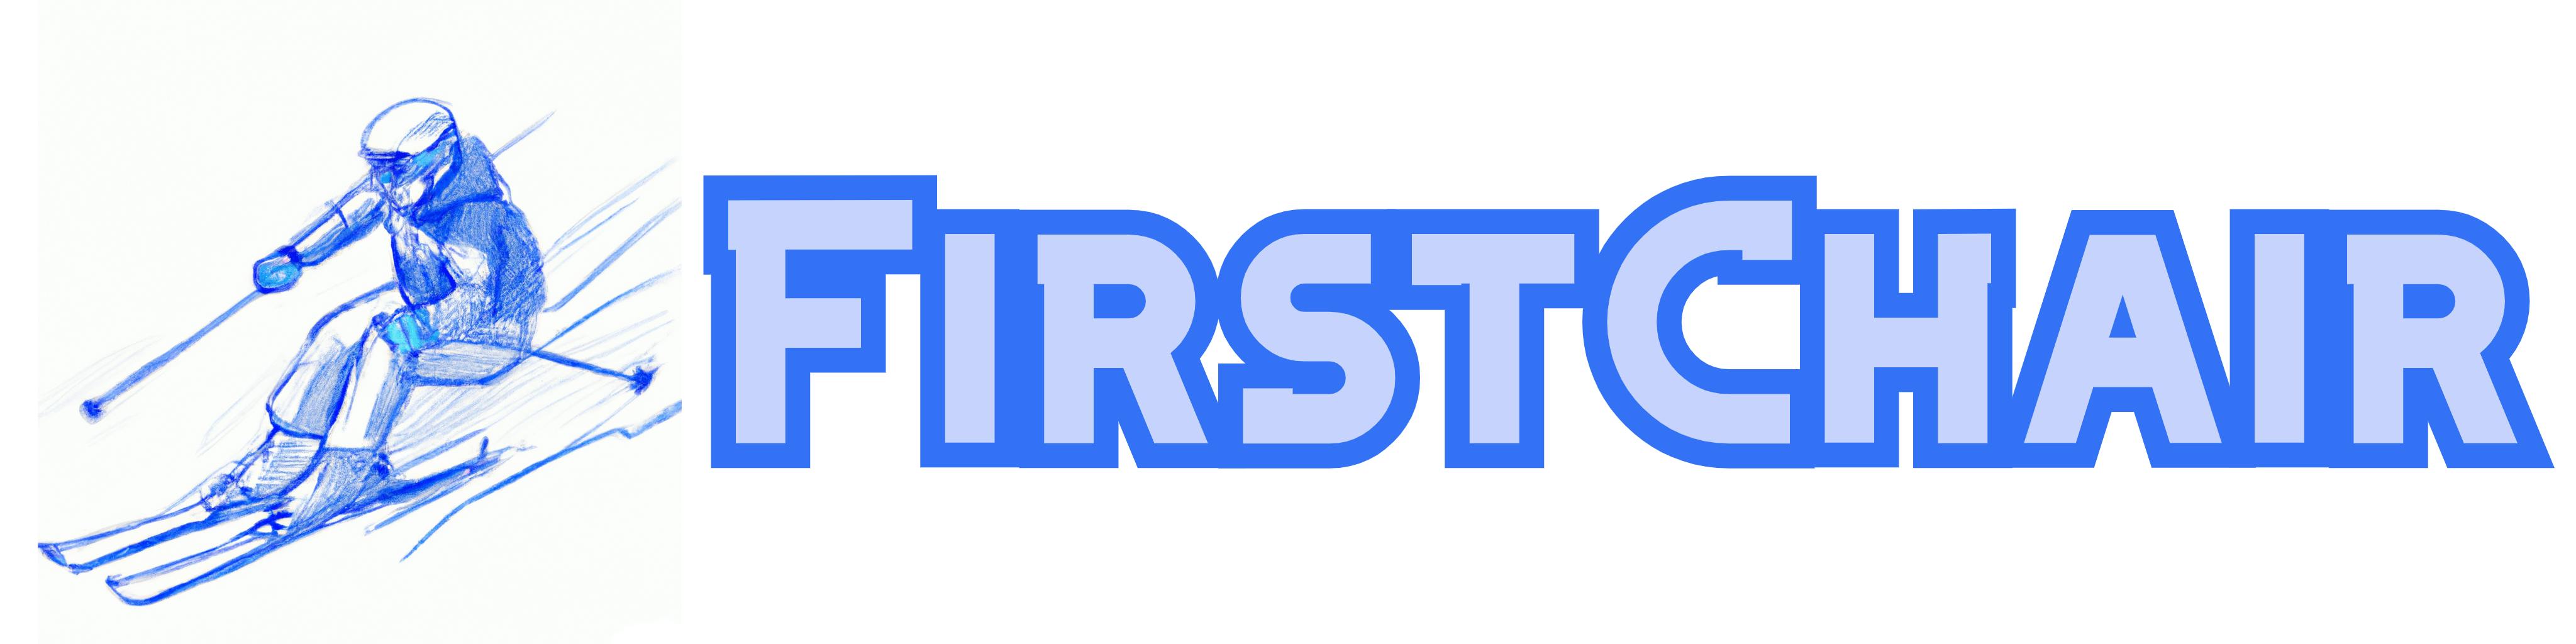 FirstChair.ski title logo